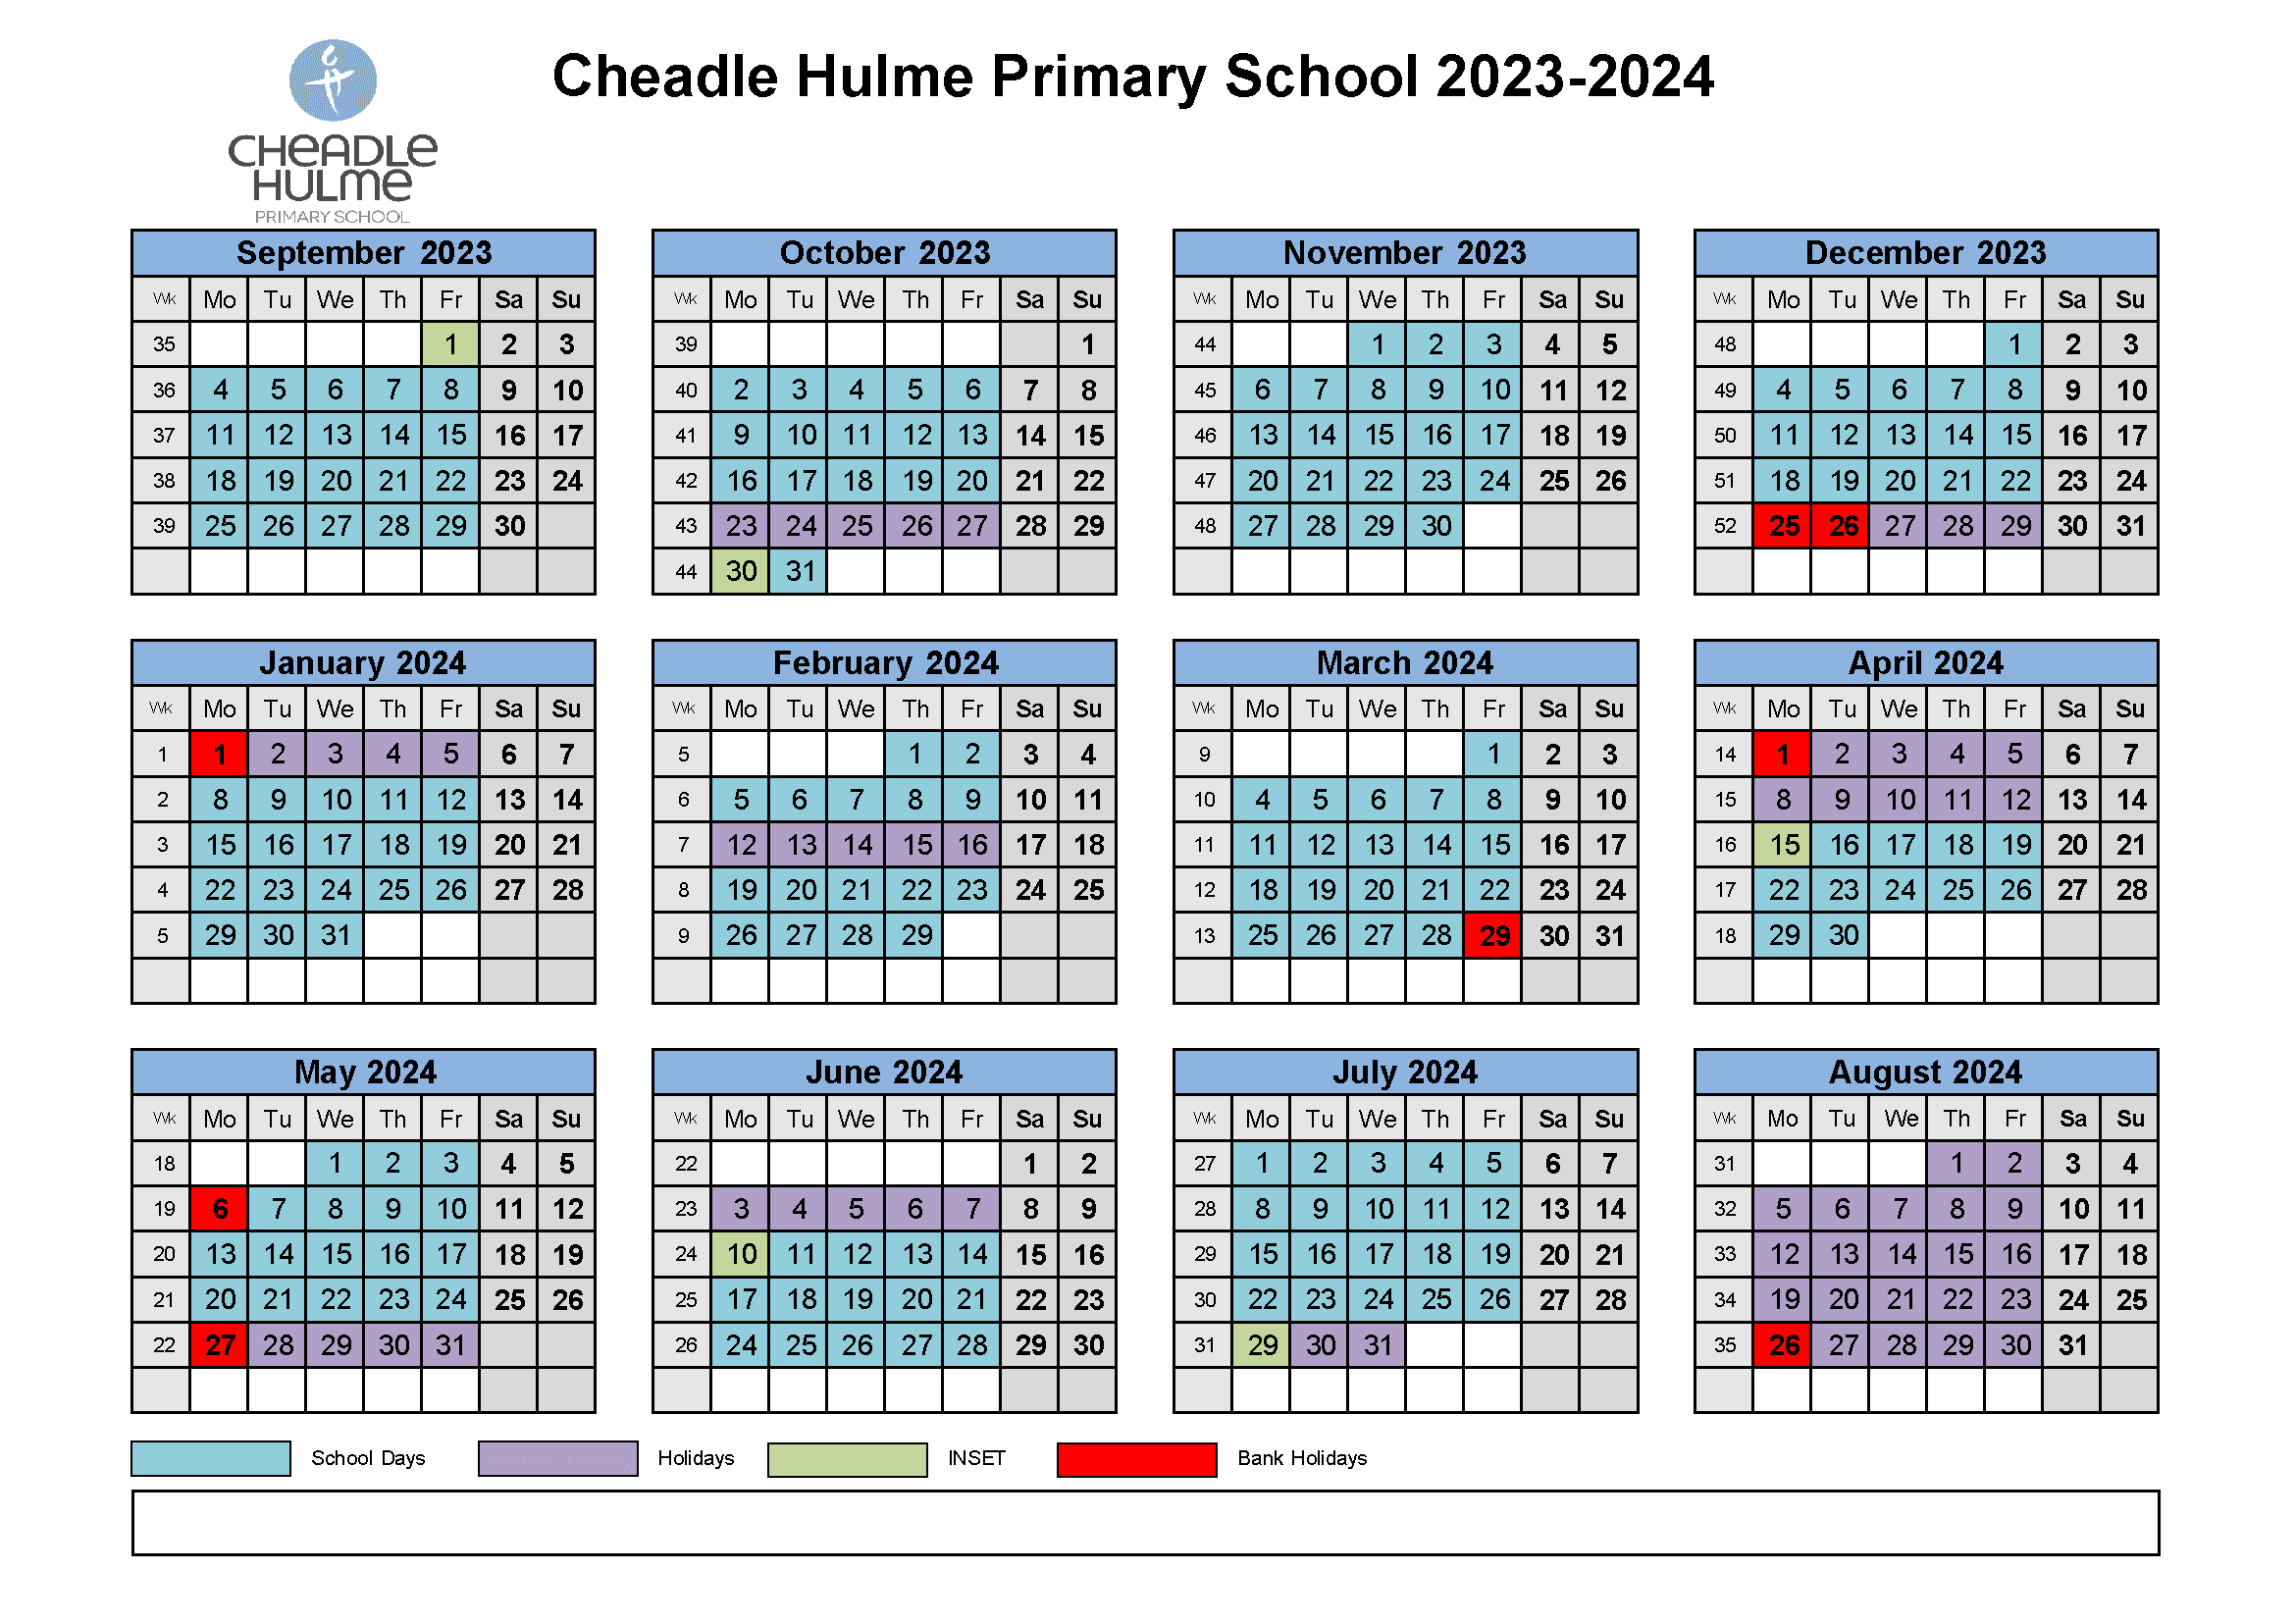 Cheadle Hulme Primary School Academic Calendar view 2023-2024